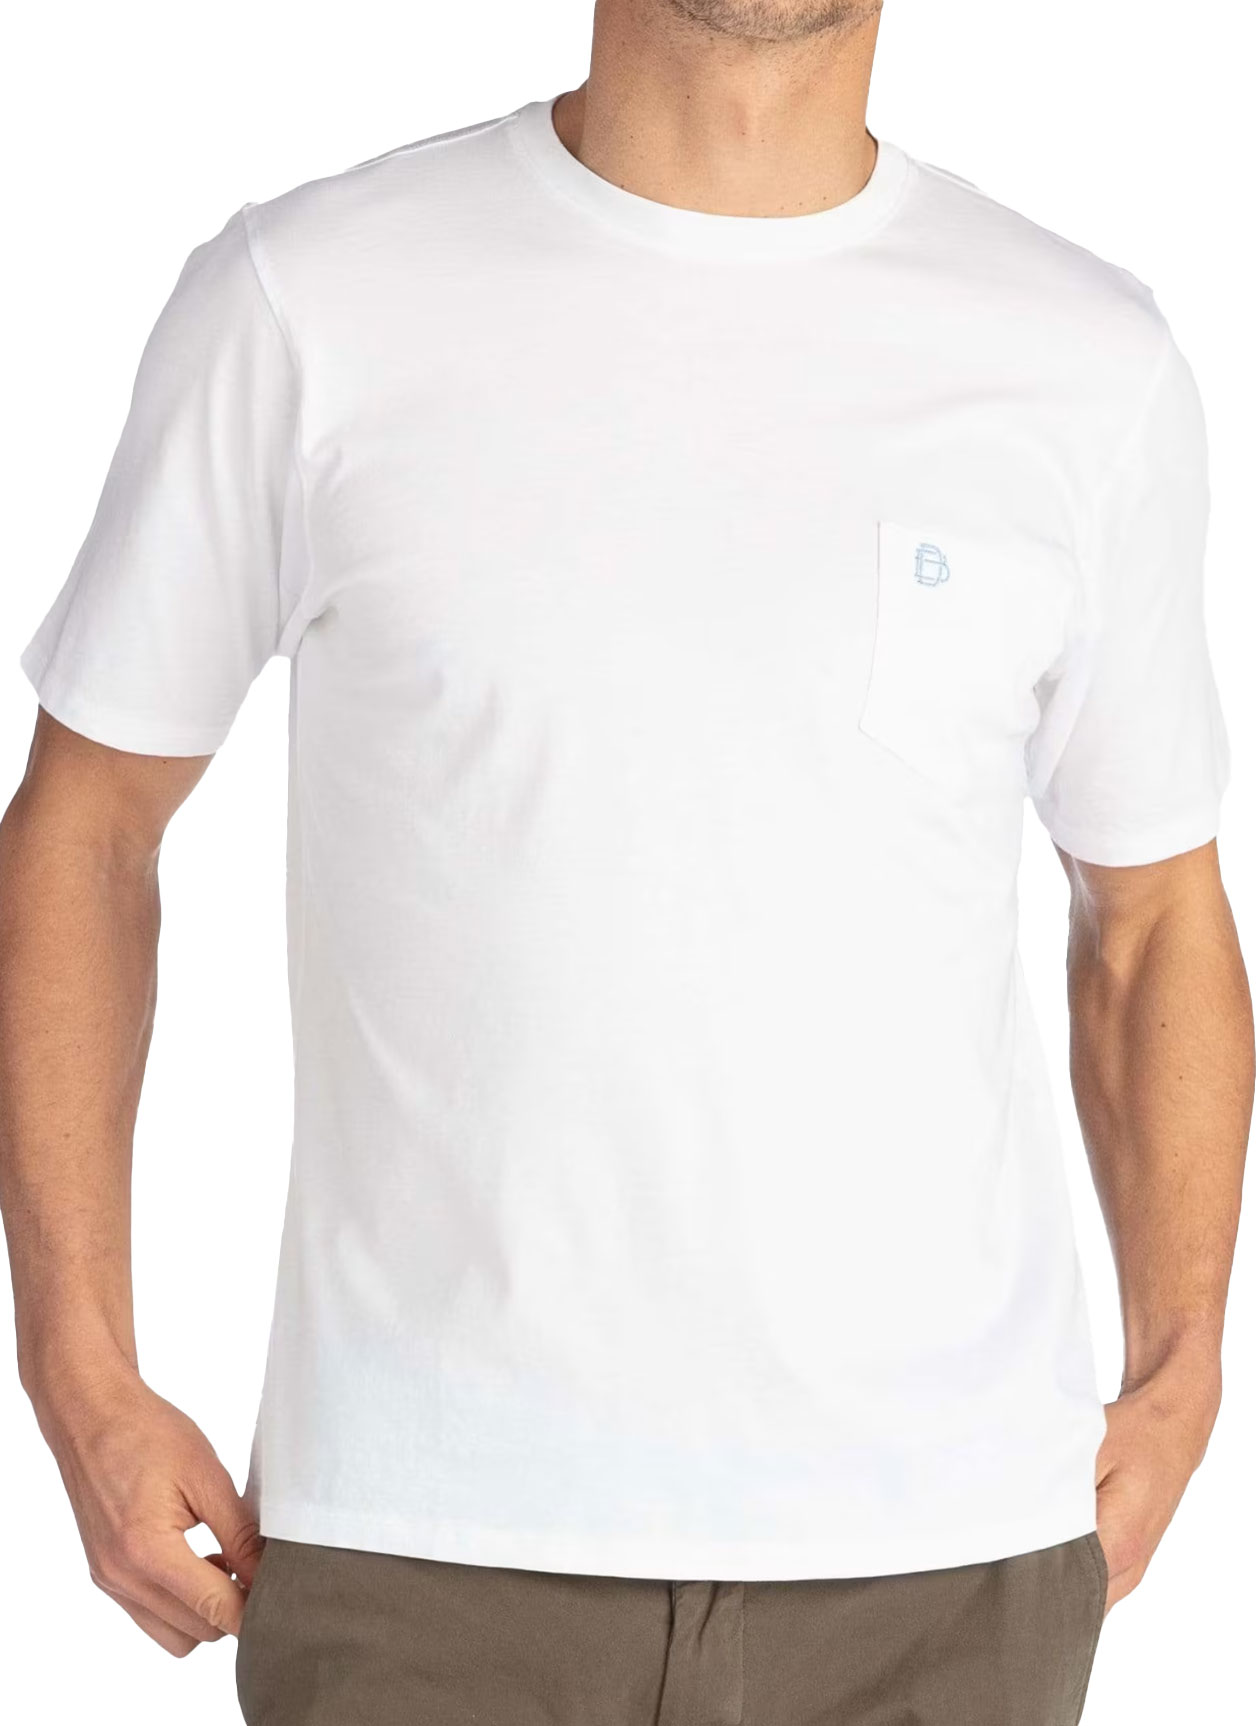 B Draddy Men's White Dewey Pocket T-Shirt